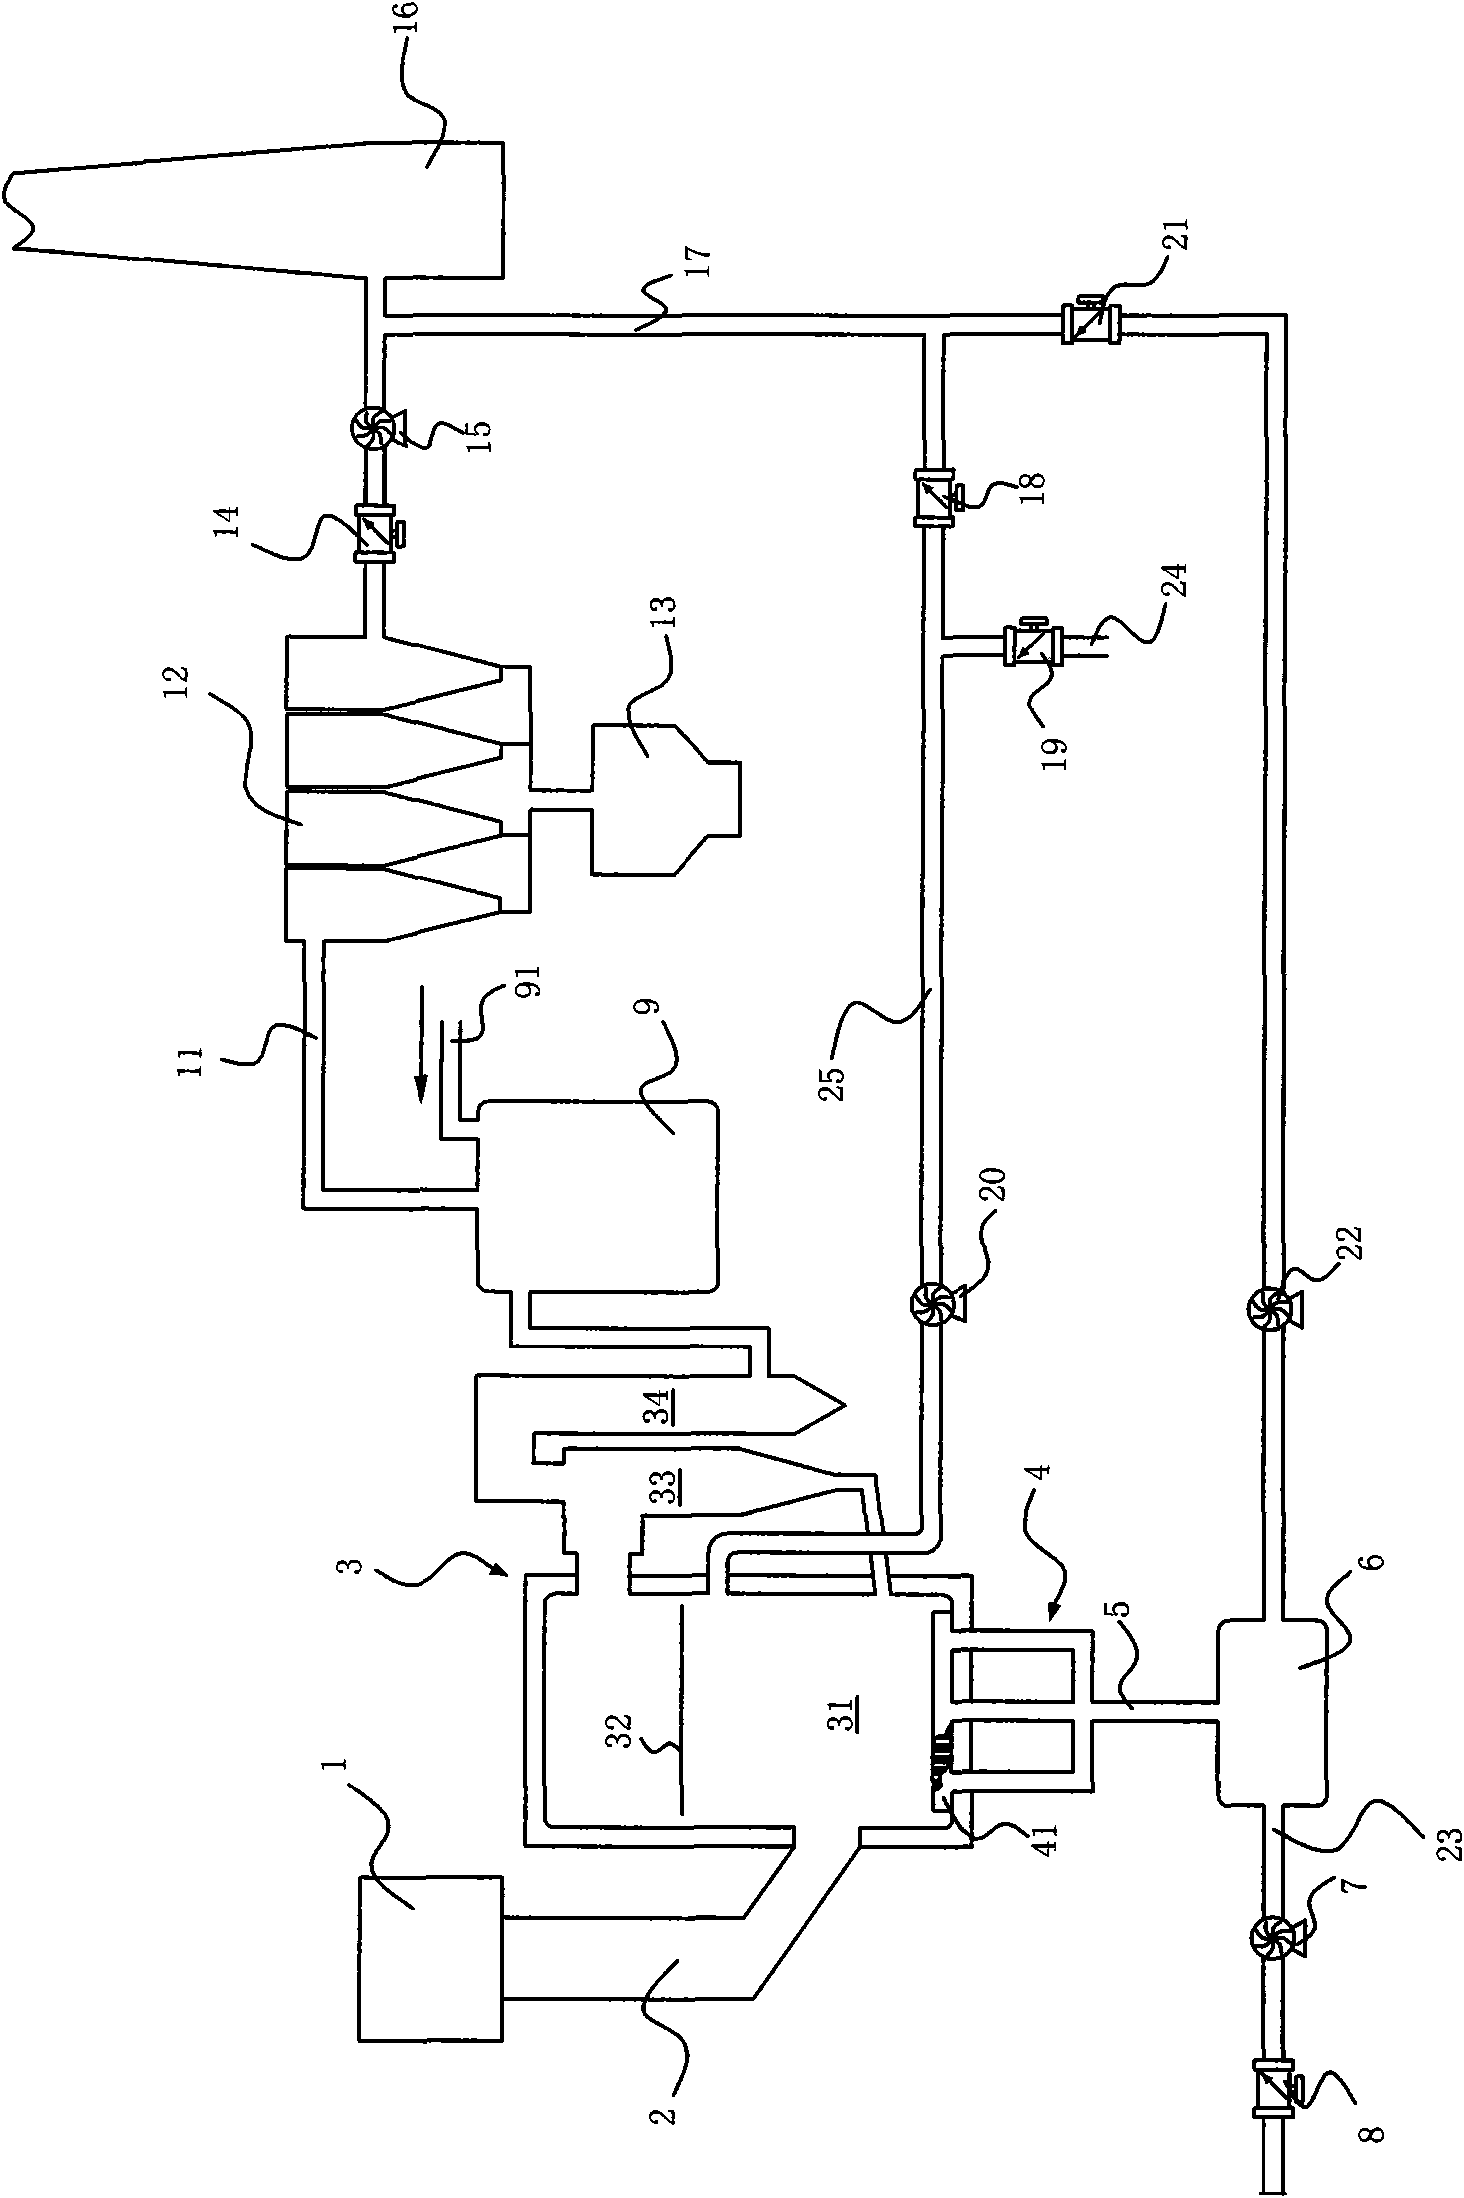 Fluidized-bed boiler